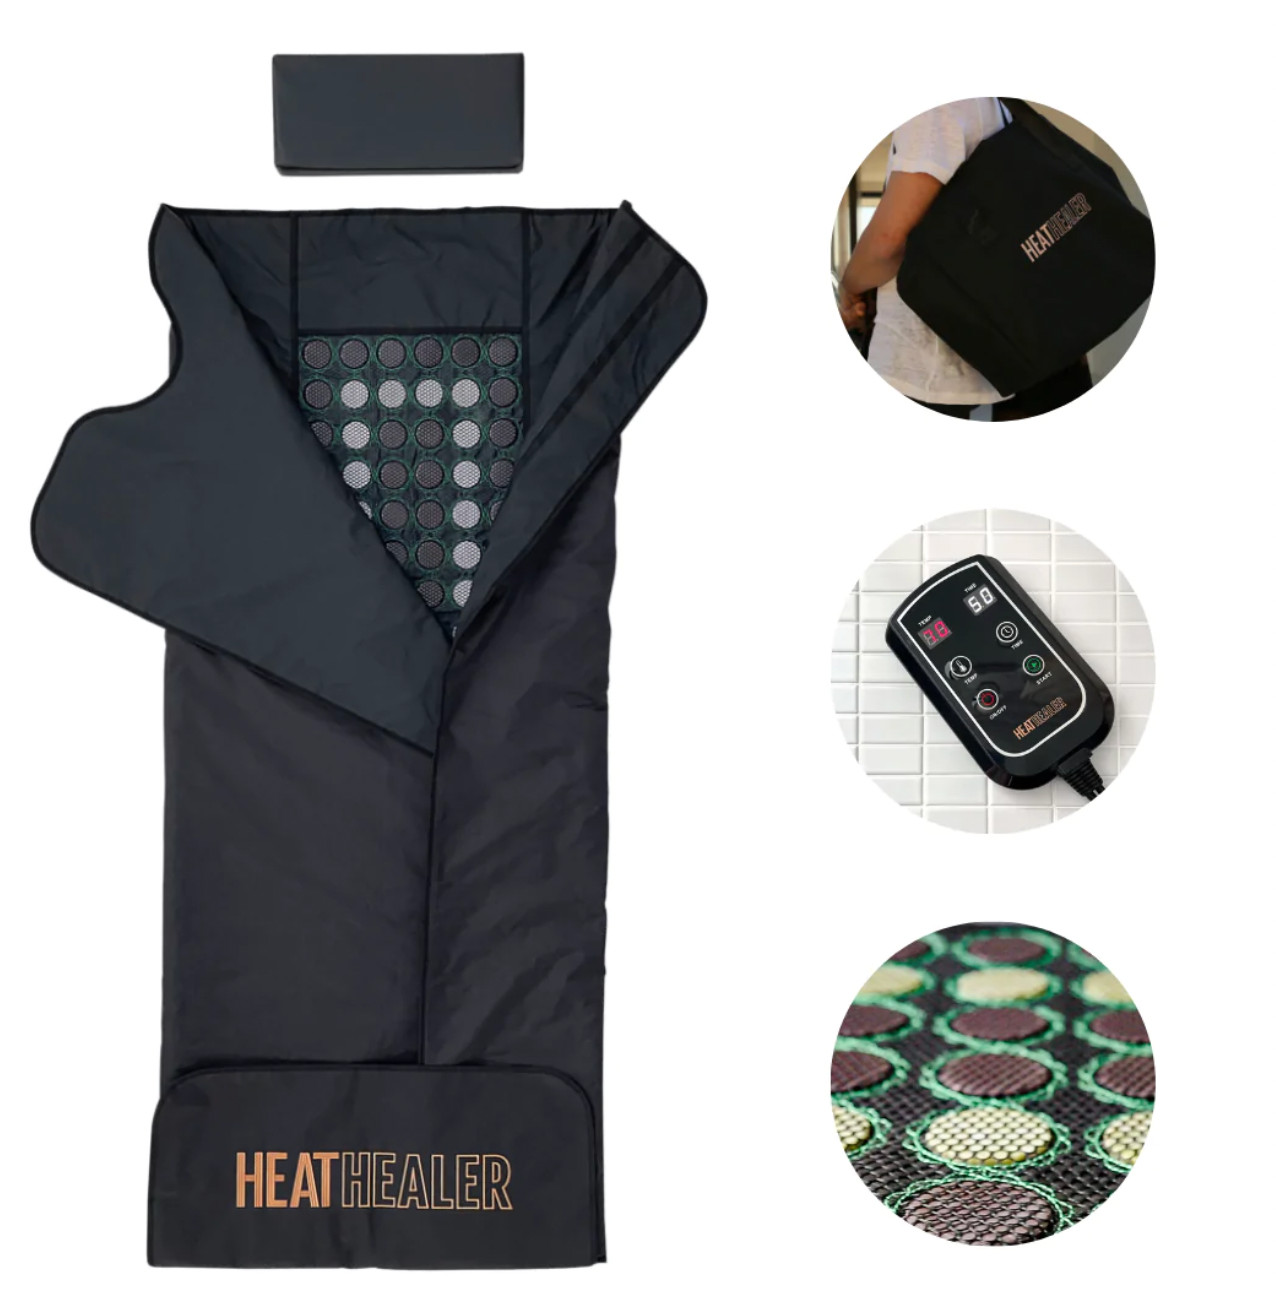 image collage of the heat healer sauna blanket